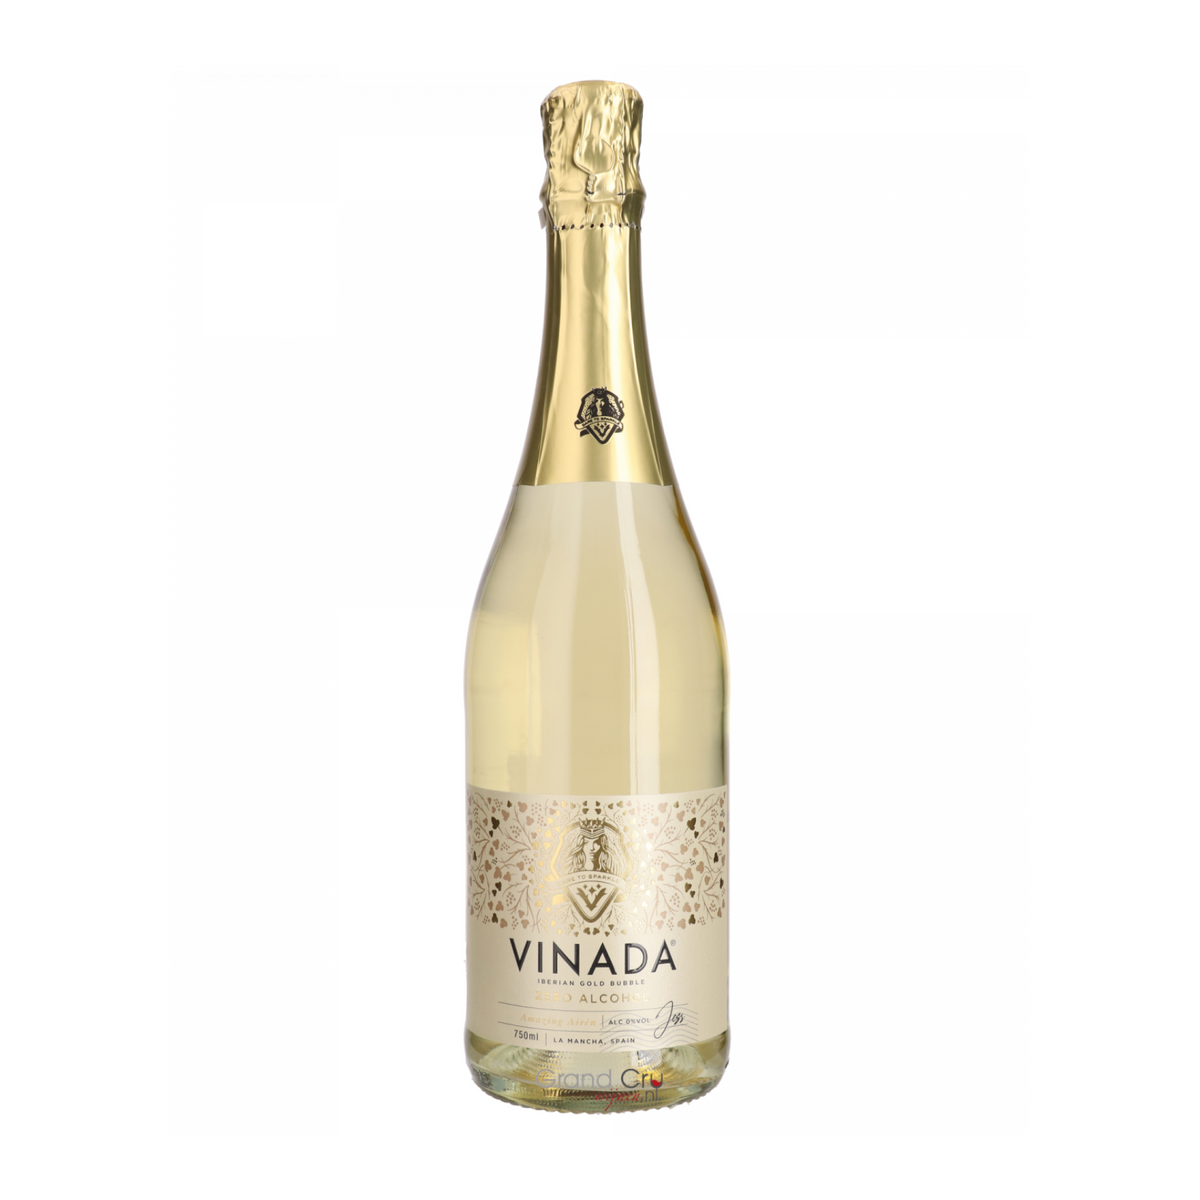 200mL VINADA Amazing Airen Sparkling Wine | Dealcoholized